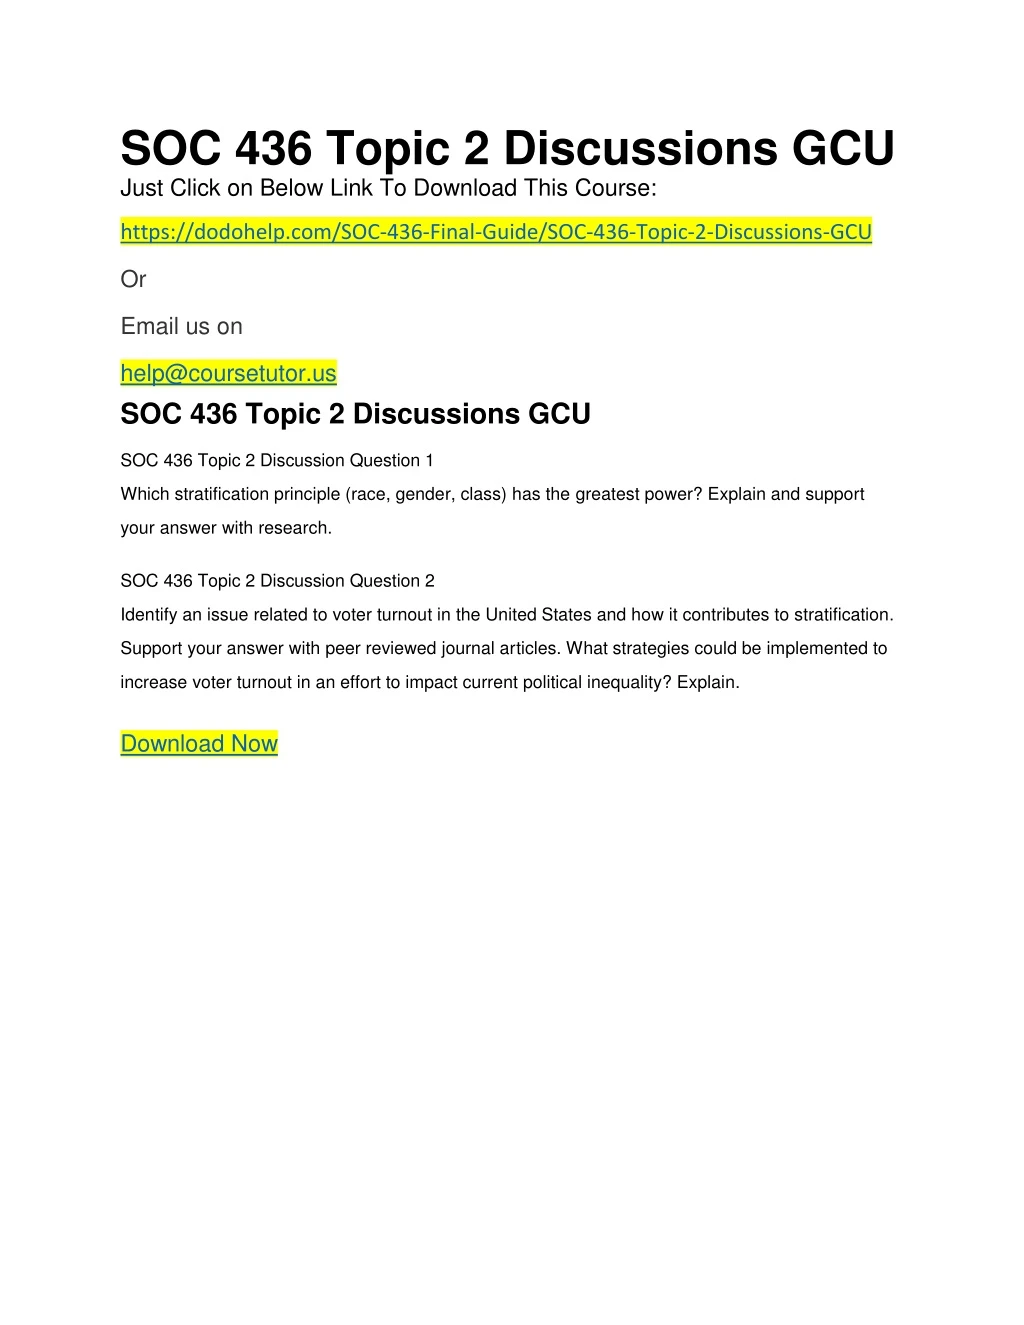 soc 436 topic 2 discussions gcu just click